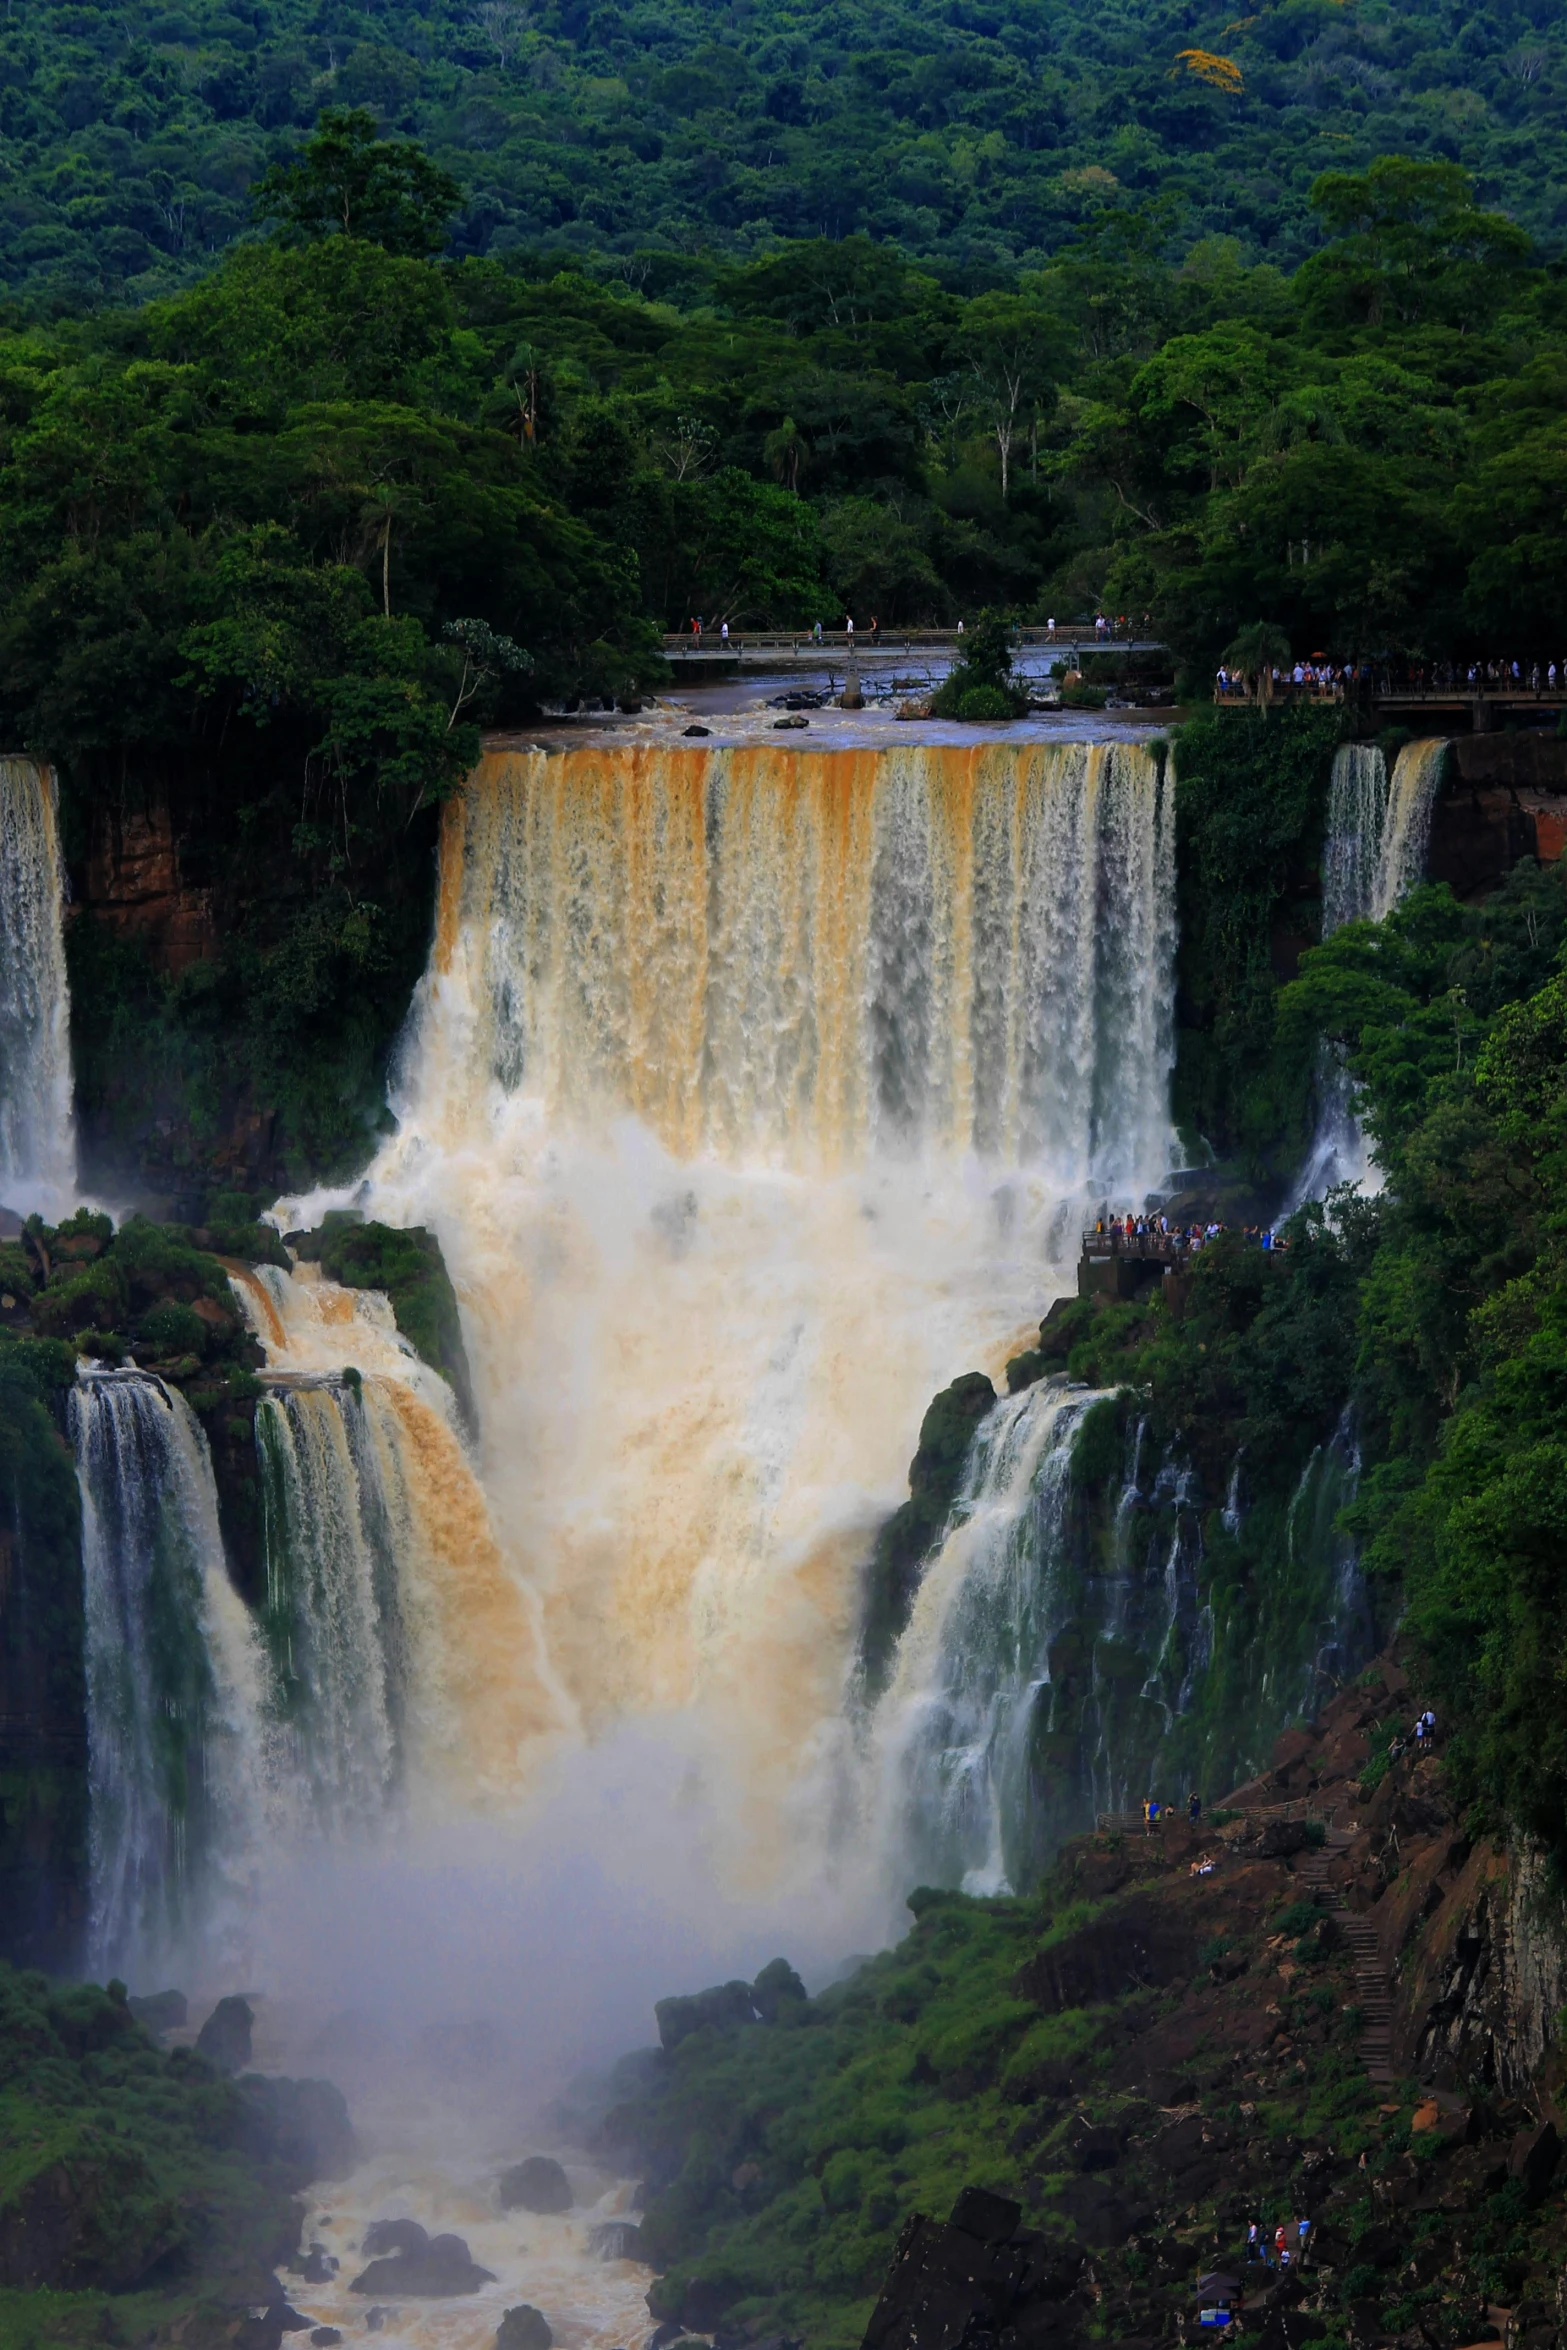 iguana falls are shown surrounded by lush vegetation